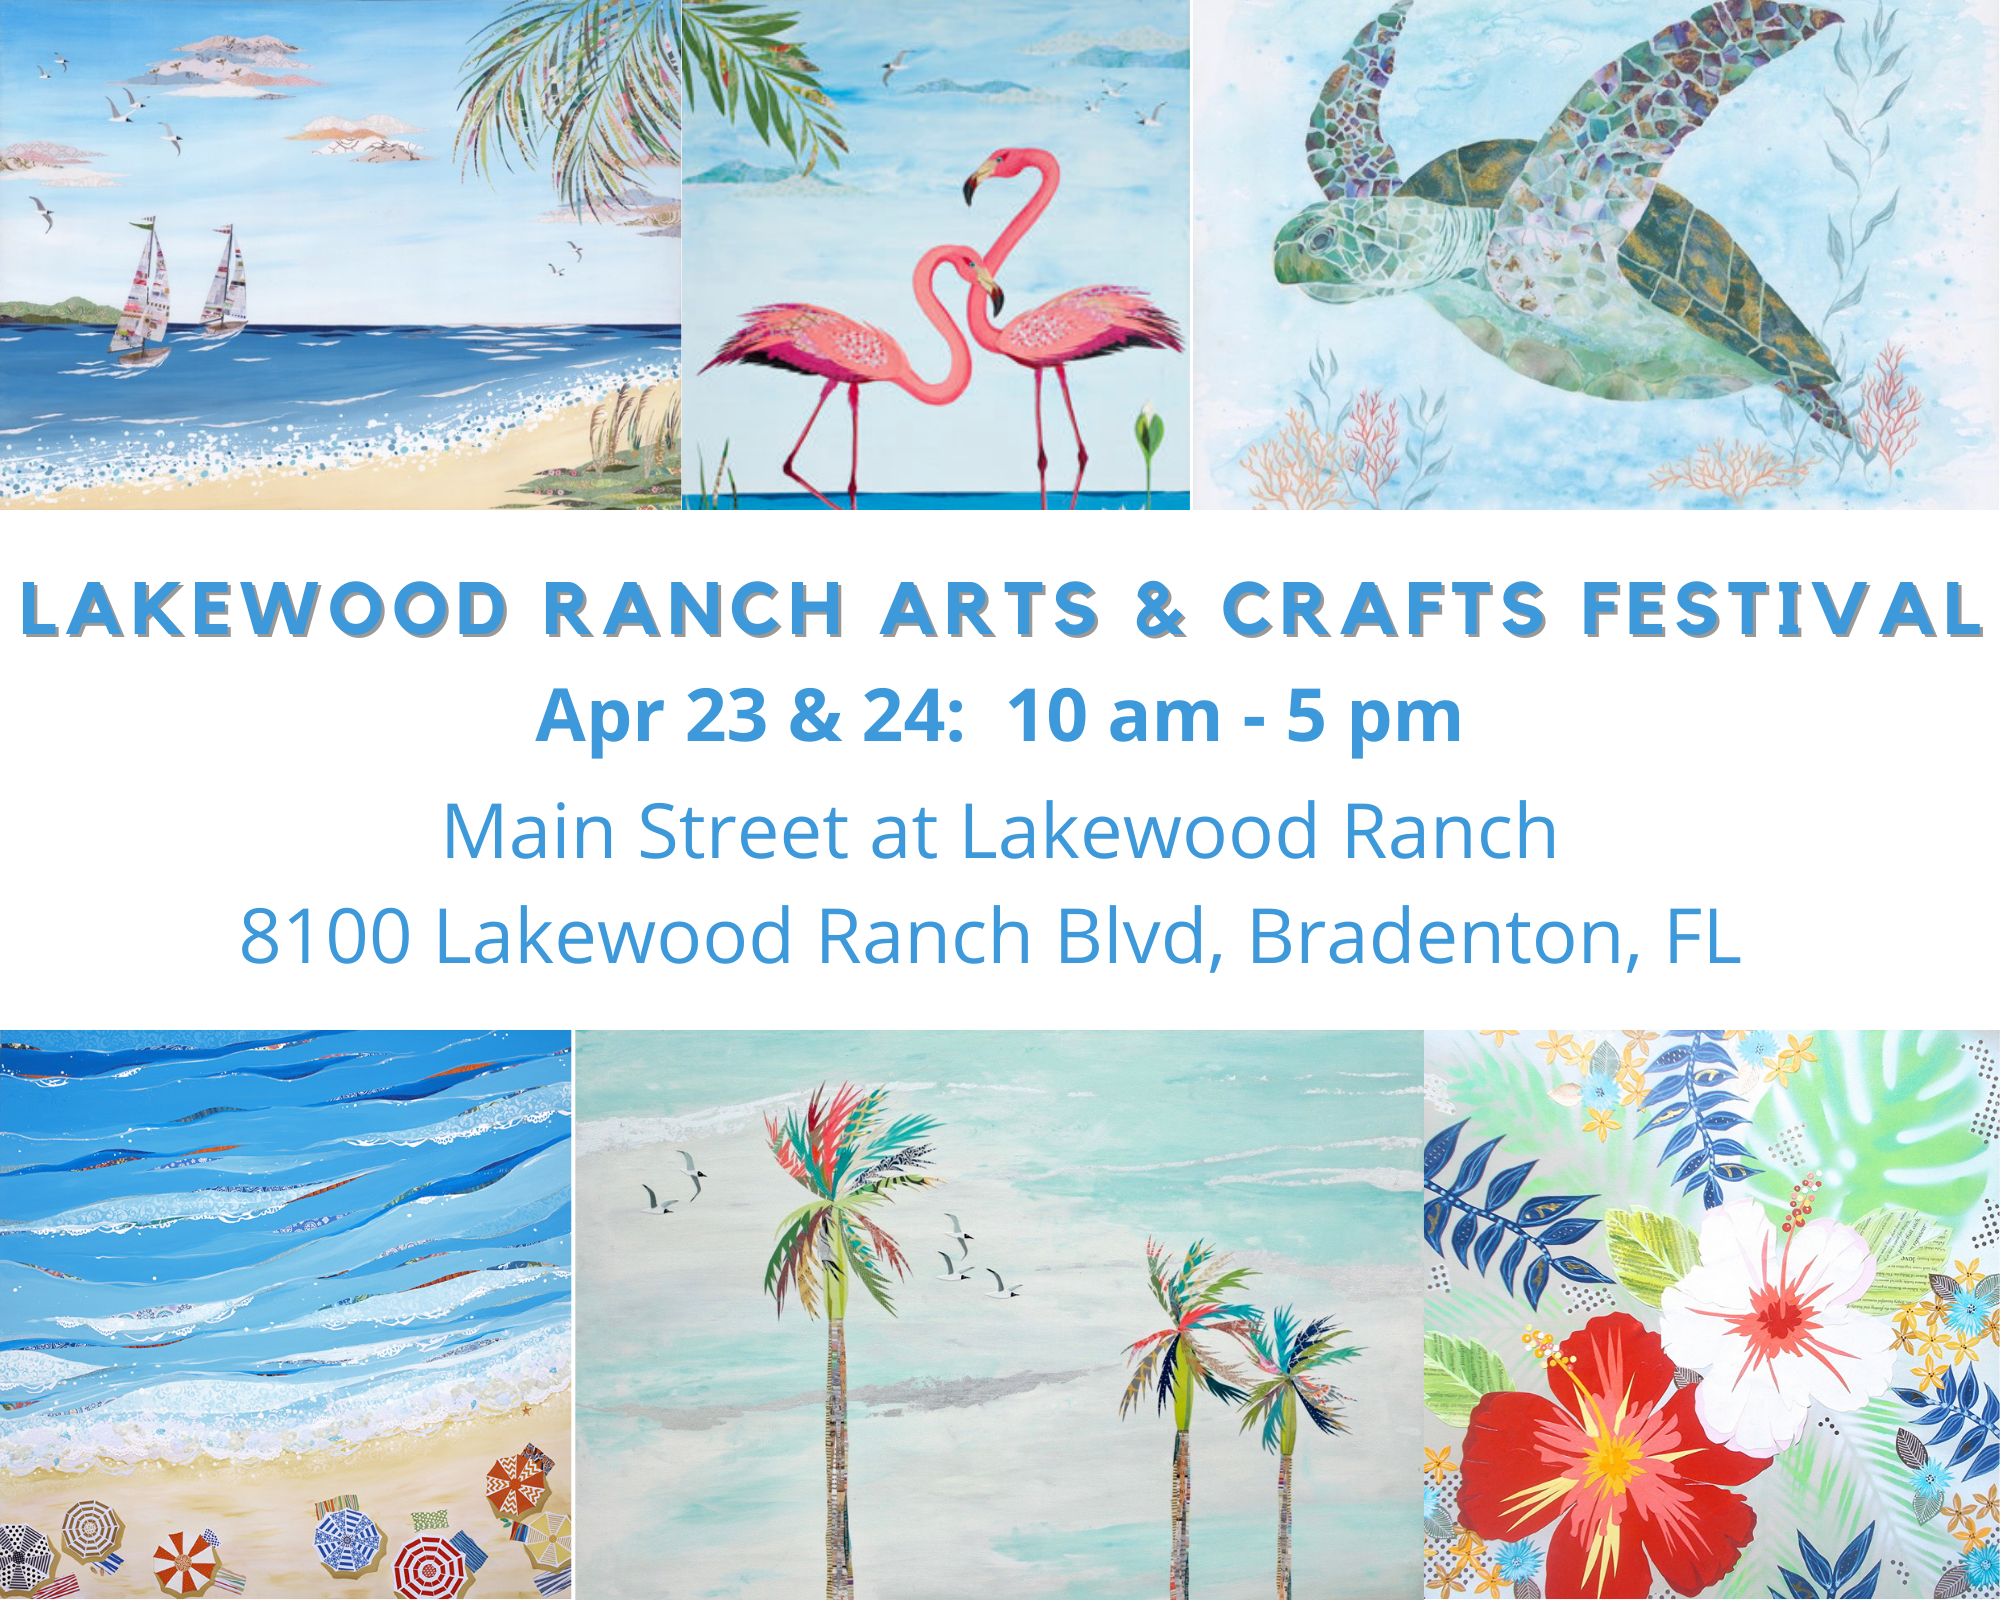 Lakewood Ranch Arts & Crafts Festival